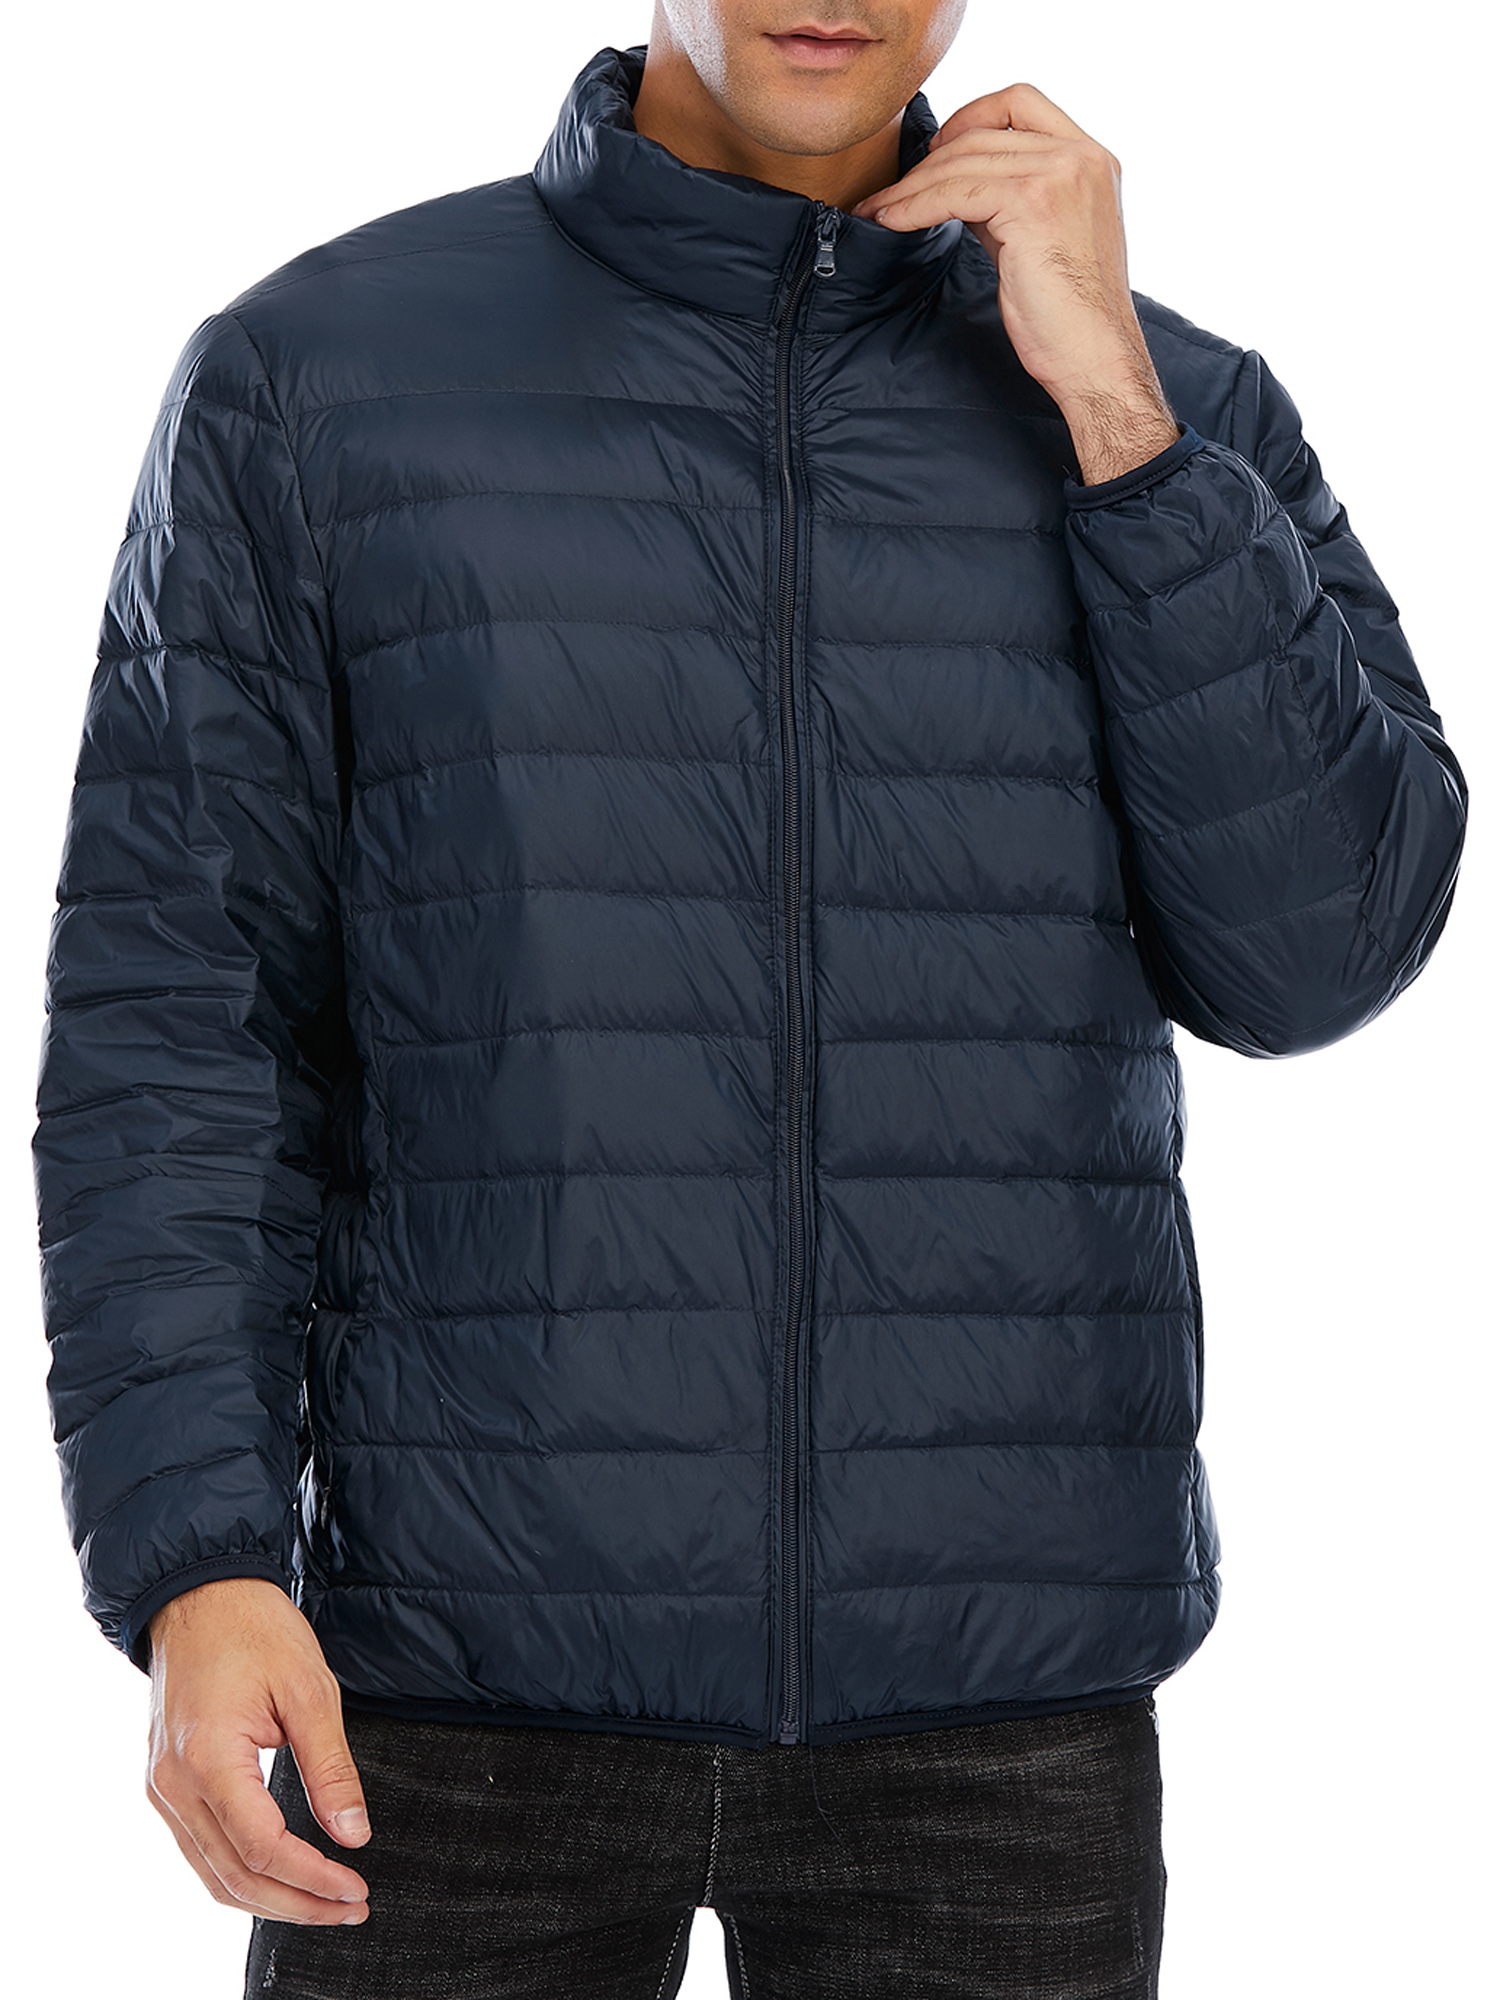 Men's Packable Down Jacket Winter Warm Jacket lightweight Zipper Jacket Puffer Bubble Coat Black Blue - image 4 of 7